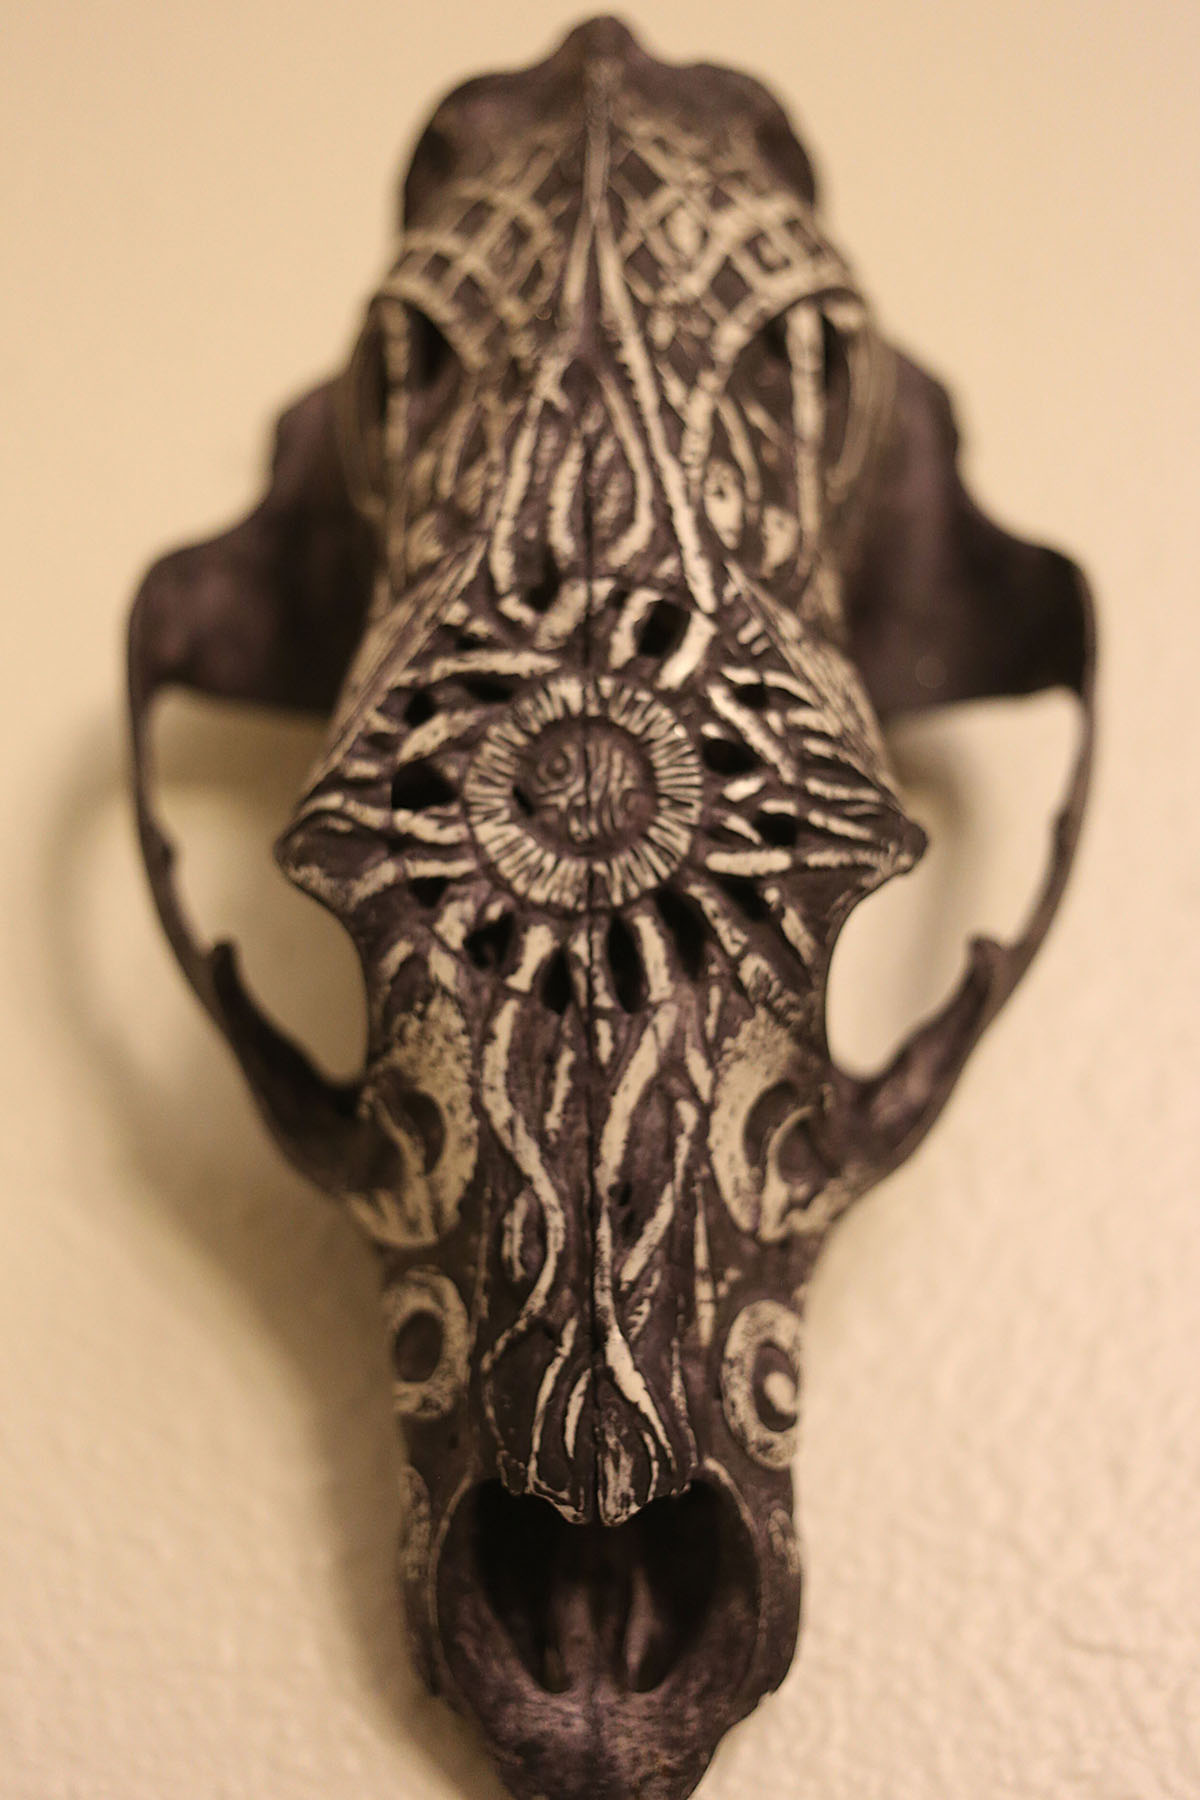 Carved black Bear skull. Image courtesy of Indi Walter